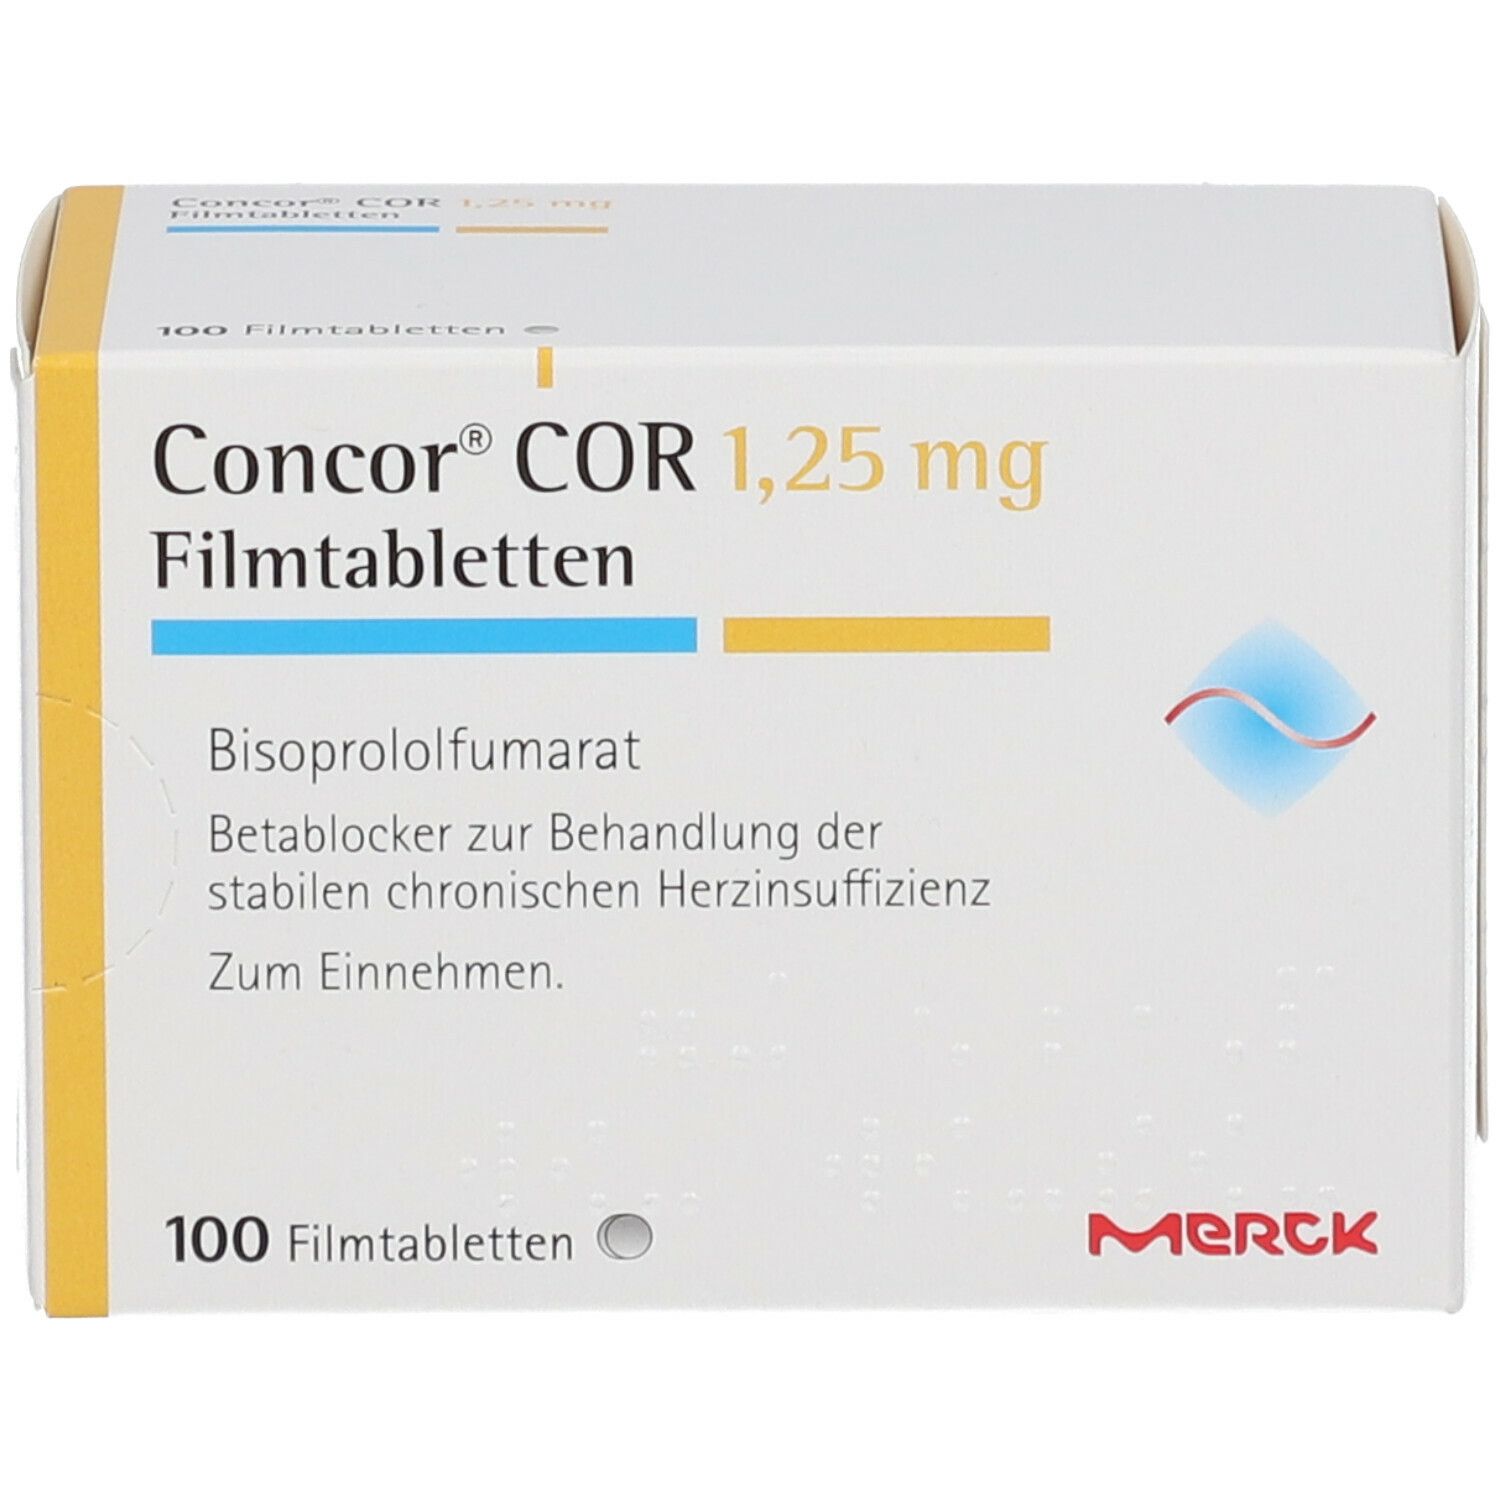 Concor® COR 1,25 mg